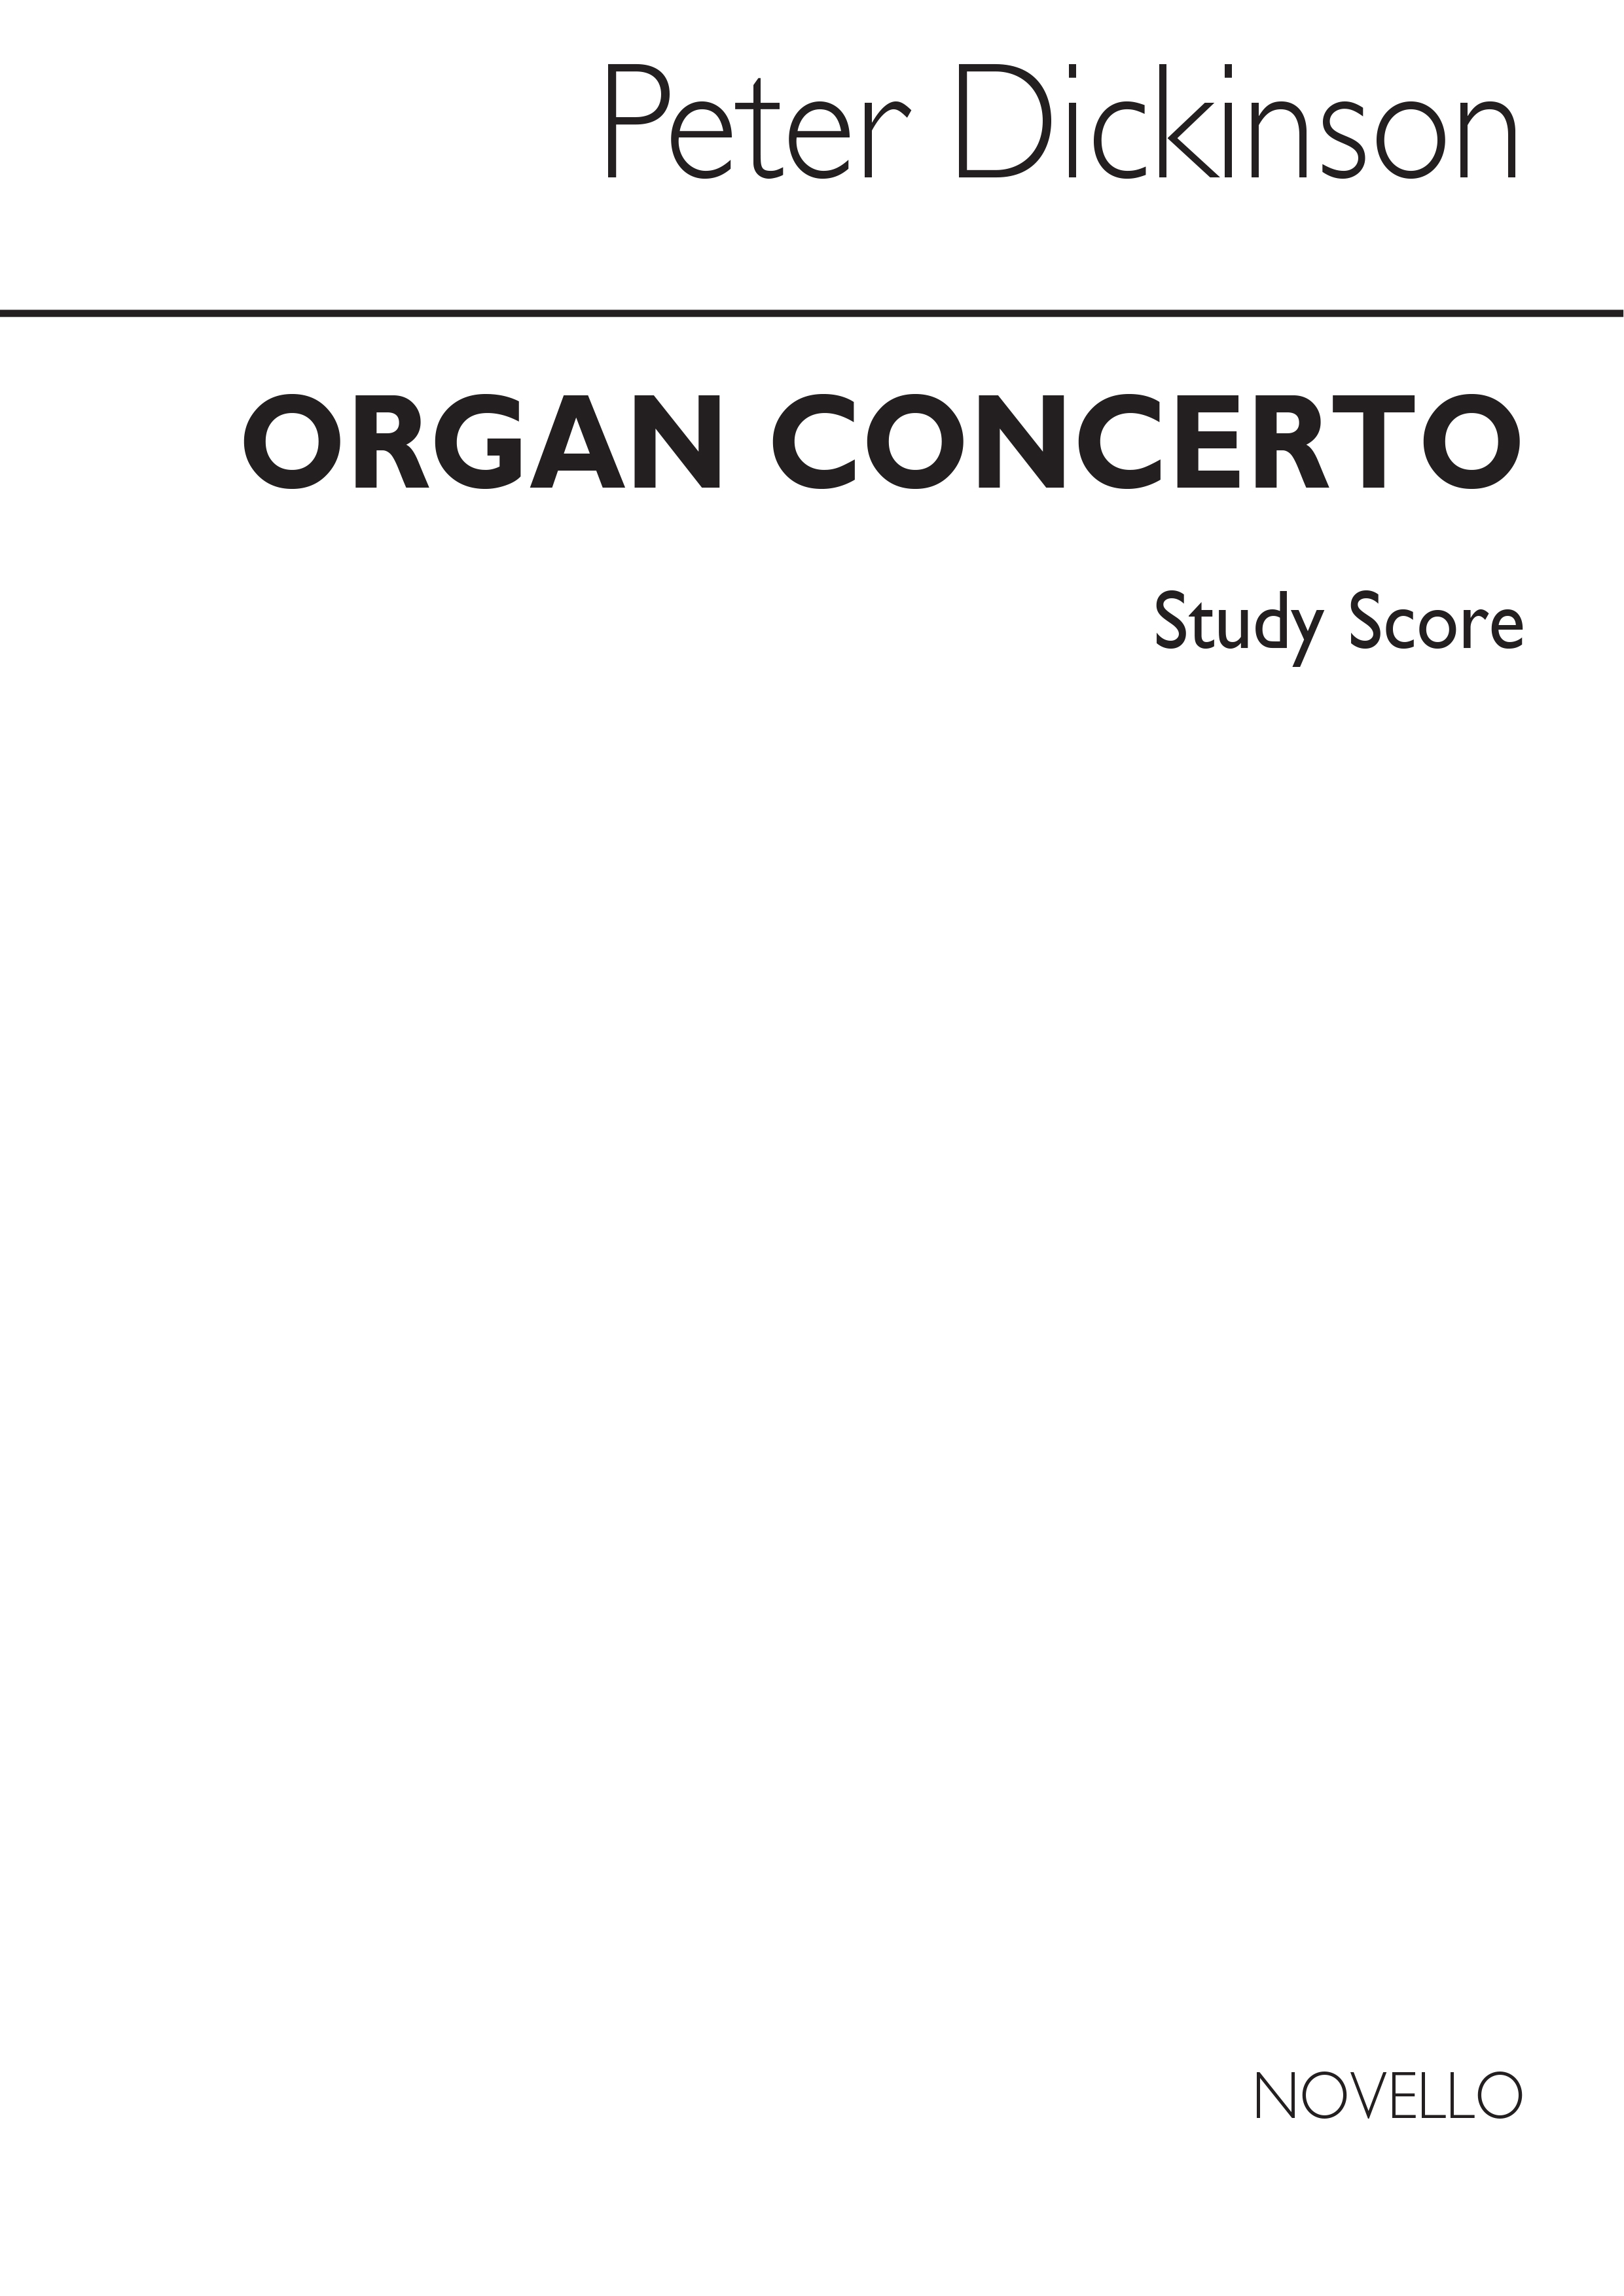 Dickinson: Concerto For Organ (Study Score)